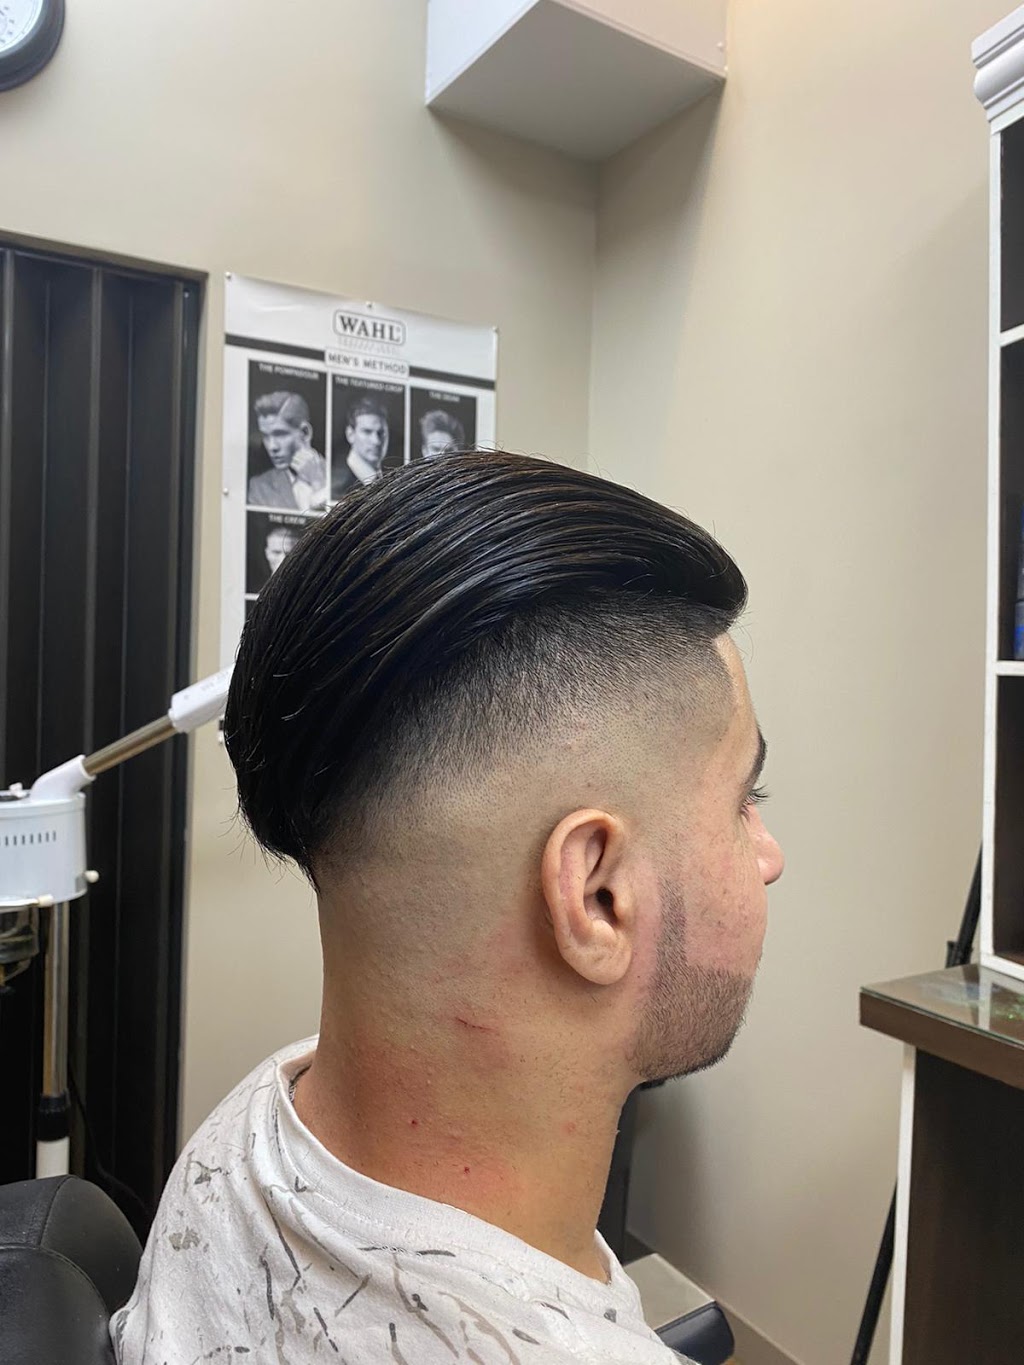 Wesam haircut | 13030 76 Ave, Surrey, BC V3W 2V6, Canada | Phone: (604) 593-8223